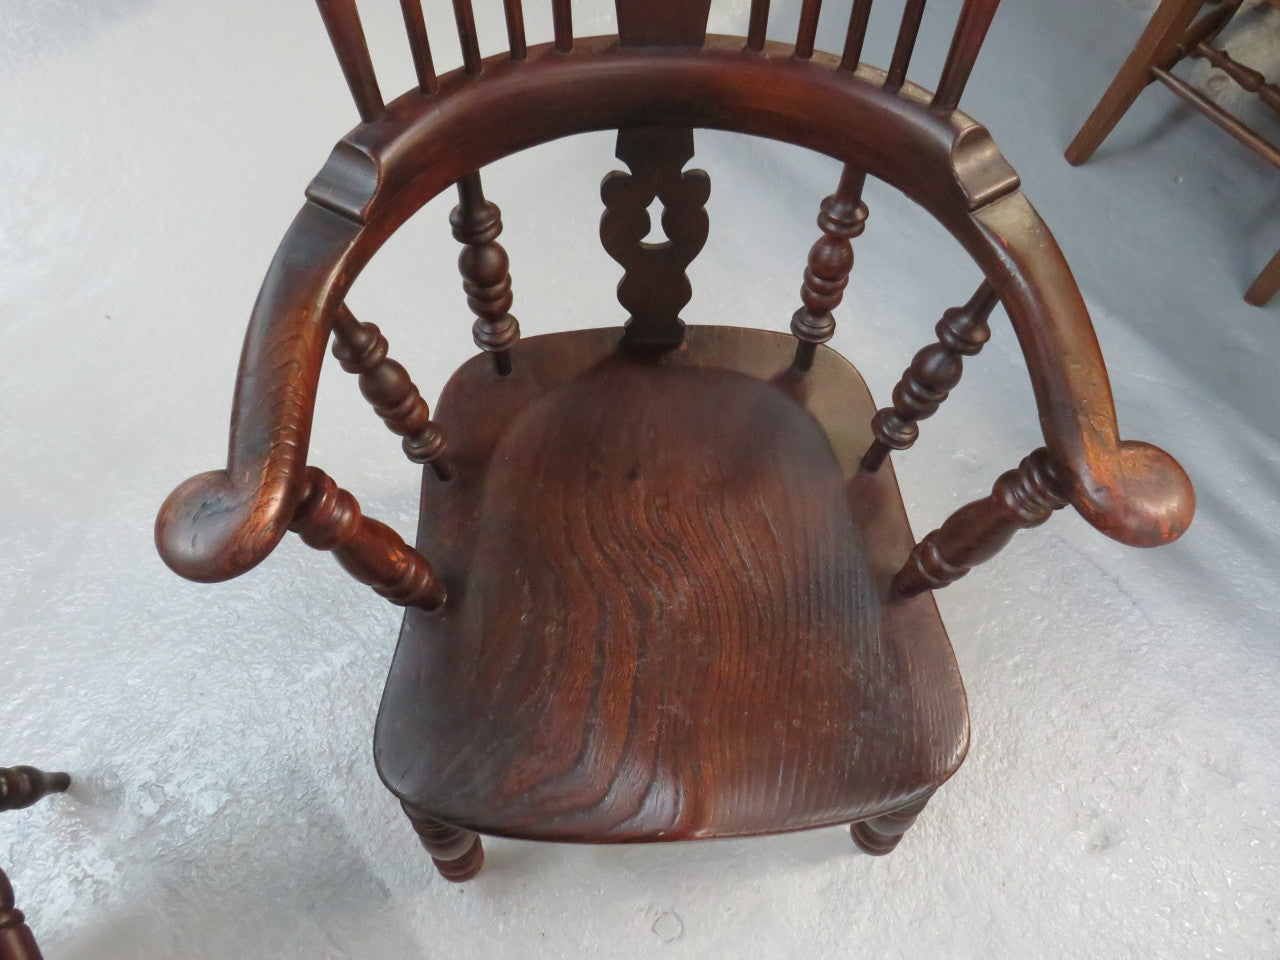 19th Century English Windsor Chair